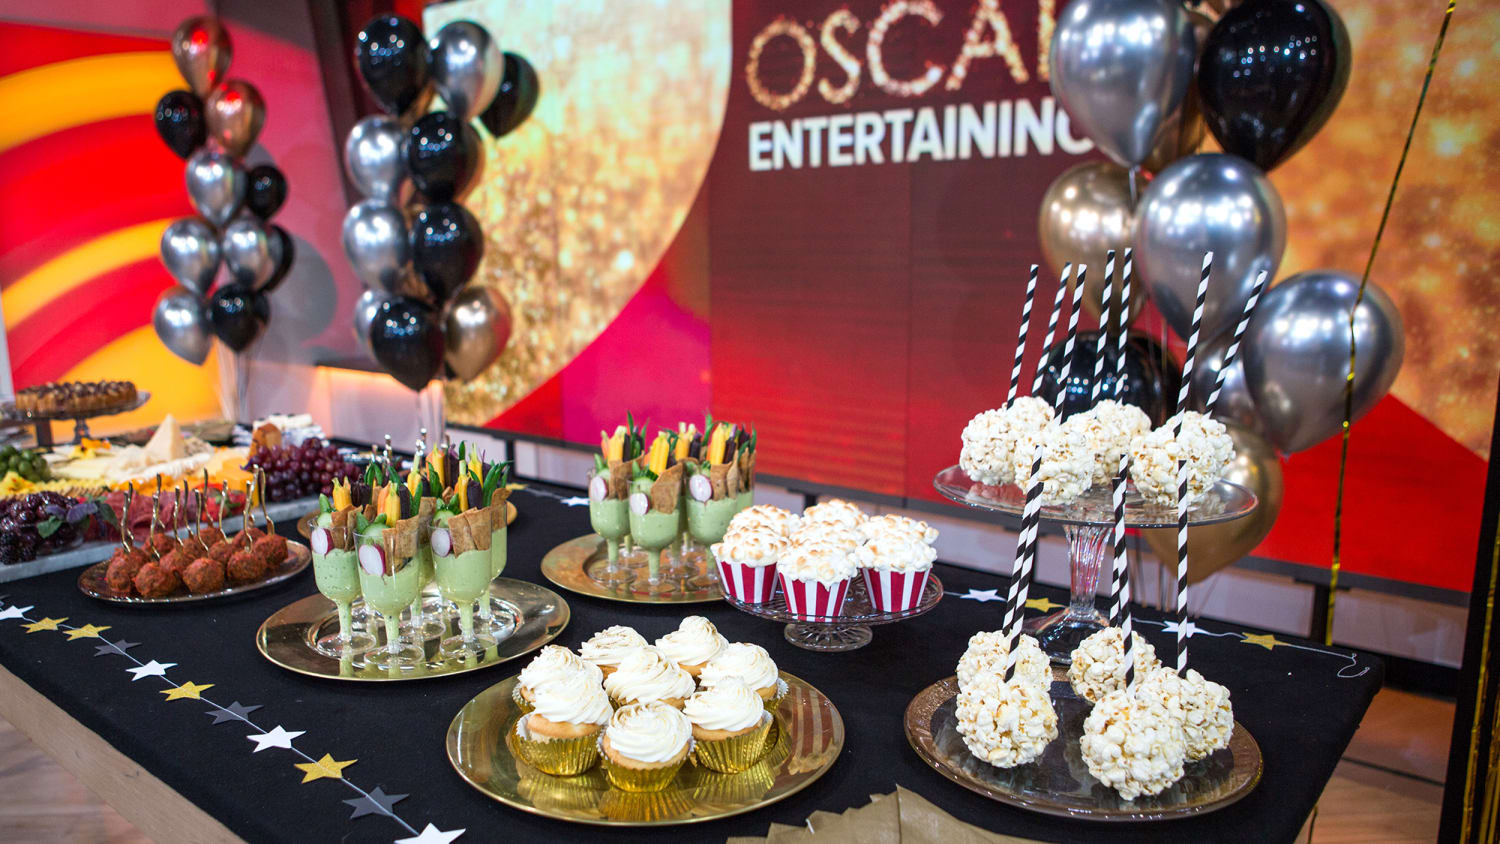 Creative Oscars Party Ideas + Film Reel Cupcakes - Make Life Lovely